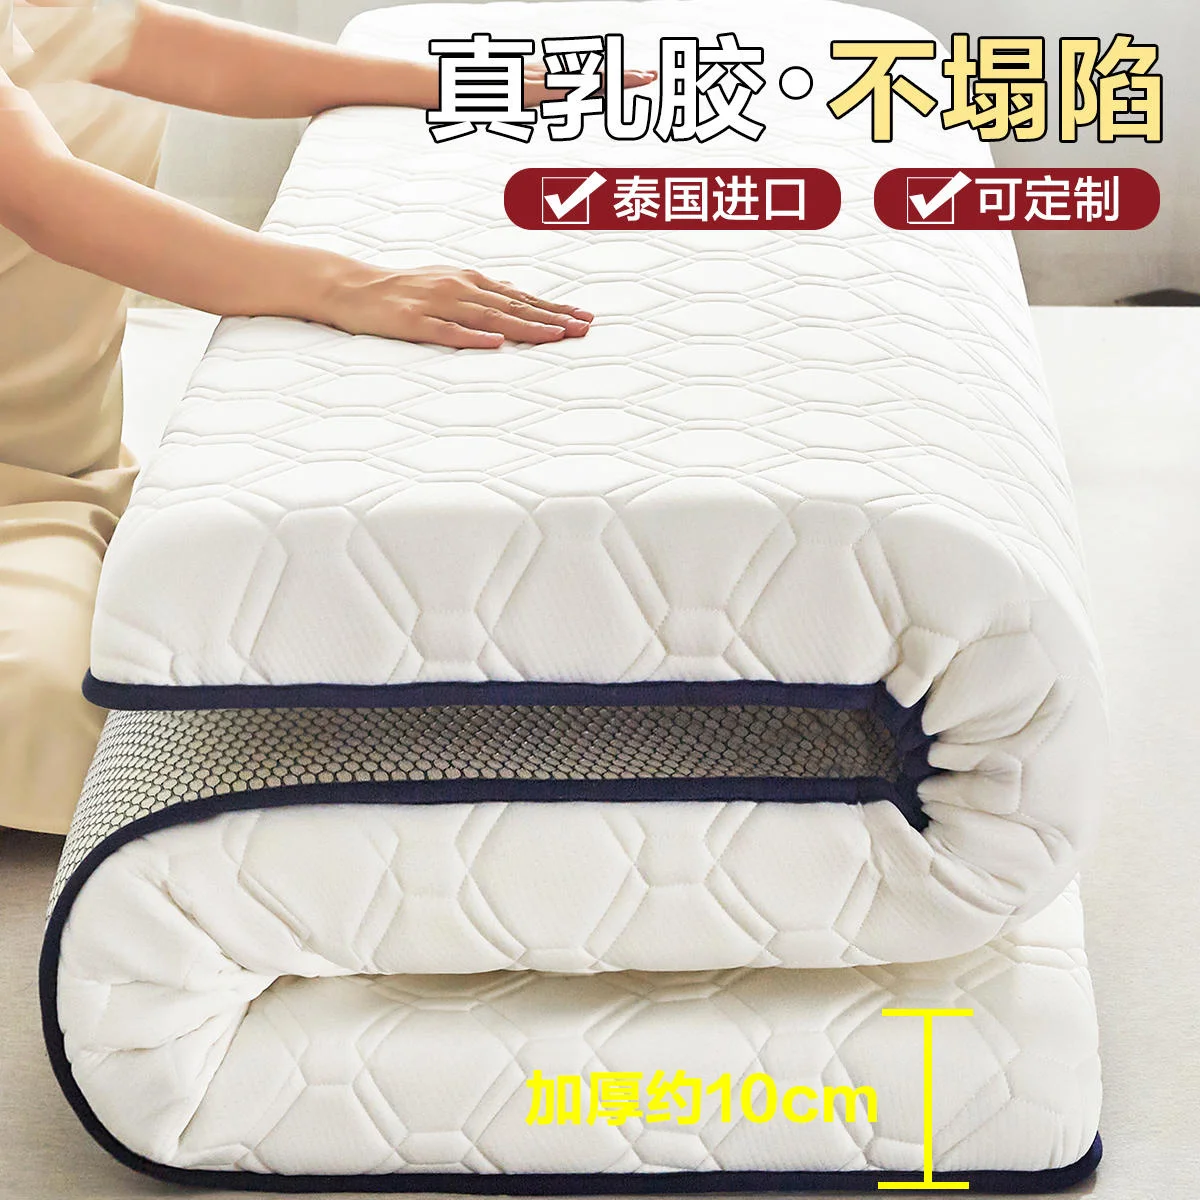 

Natural Latex Mattress cushions household latex tatami mats home hotel student dormitory sponge mats twin full queen king size